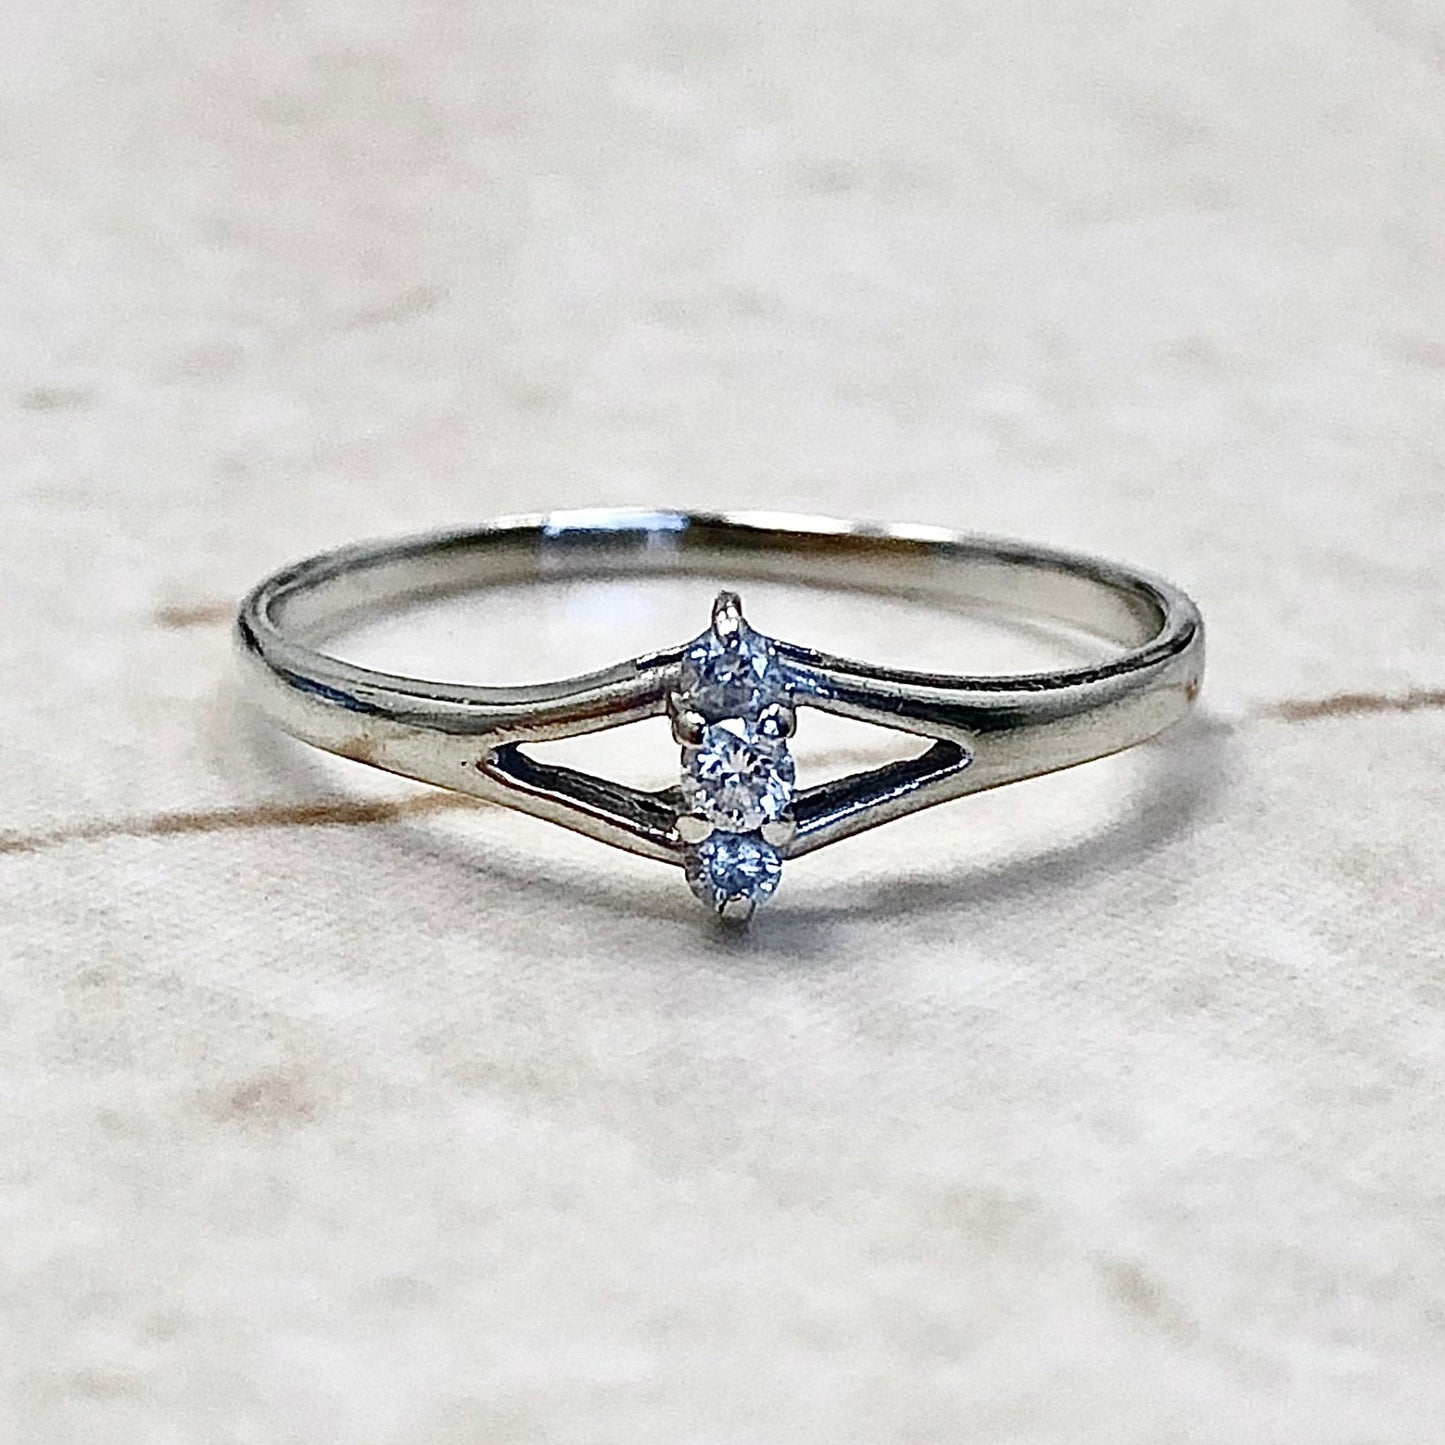 Three Stone Diamond Ring - April Birthstone Ring - 14K White Gold - Promise Ring - Anniversary Ring - Size 7 US - Birthday Gift